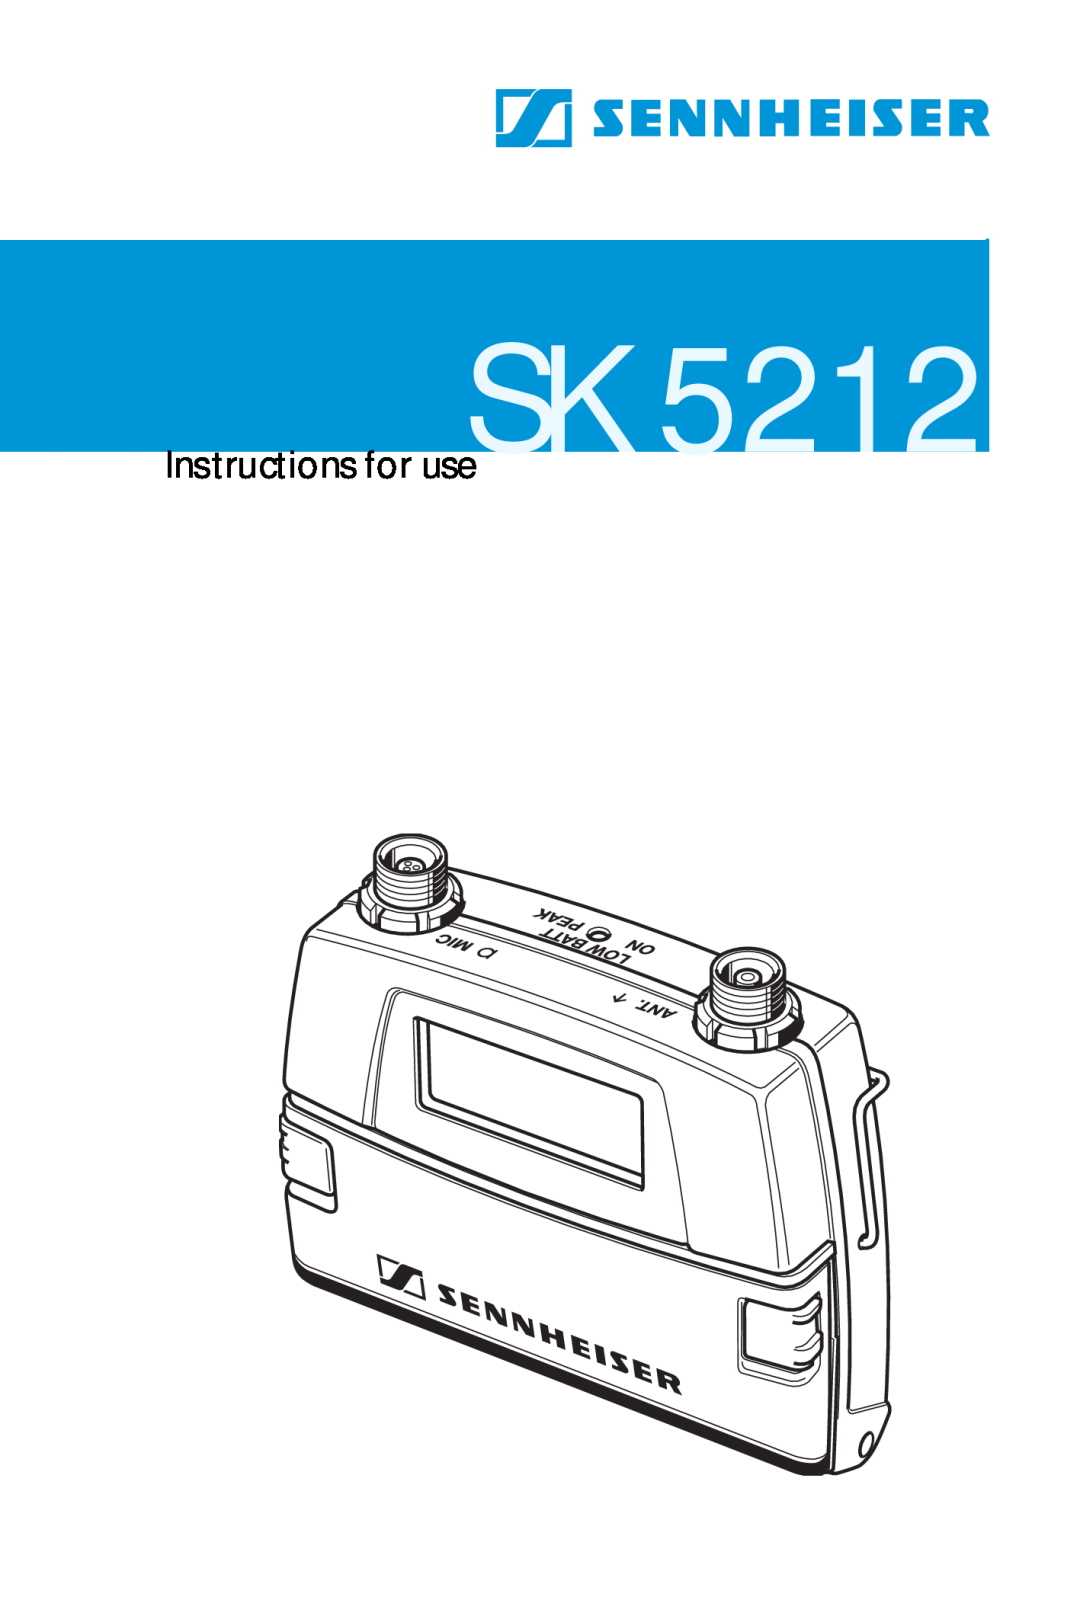 Sennheiser SK 5212 manual Instructions for use 